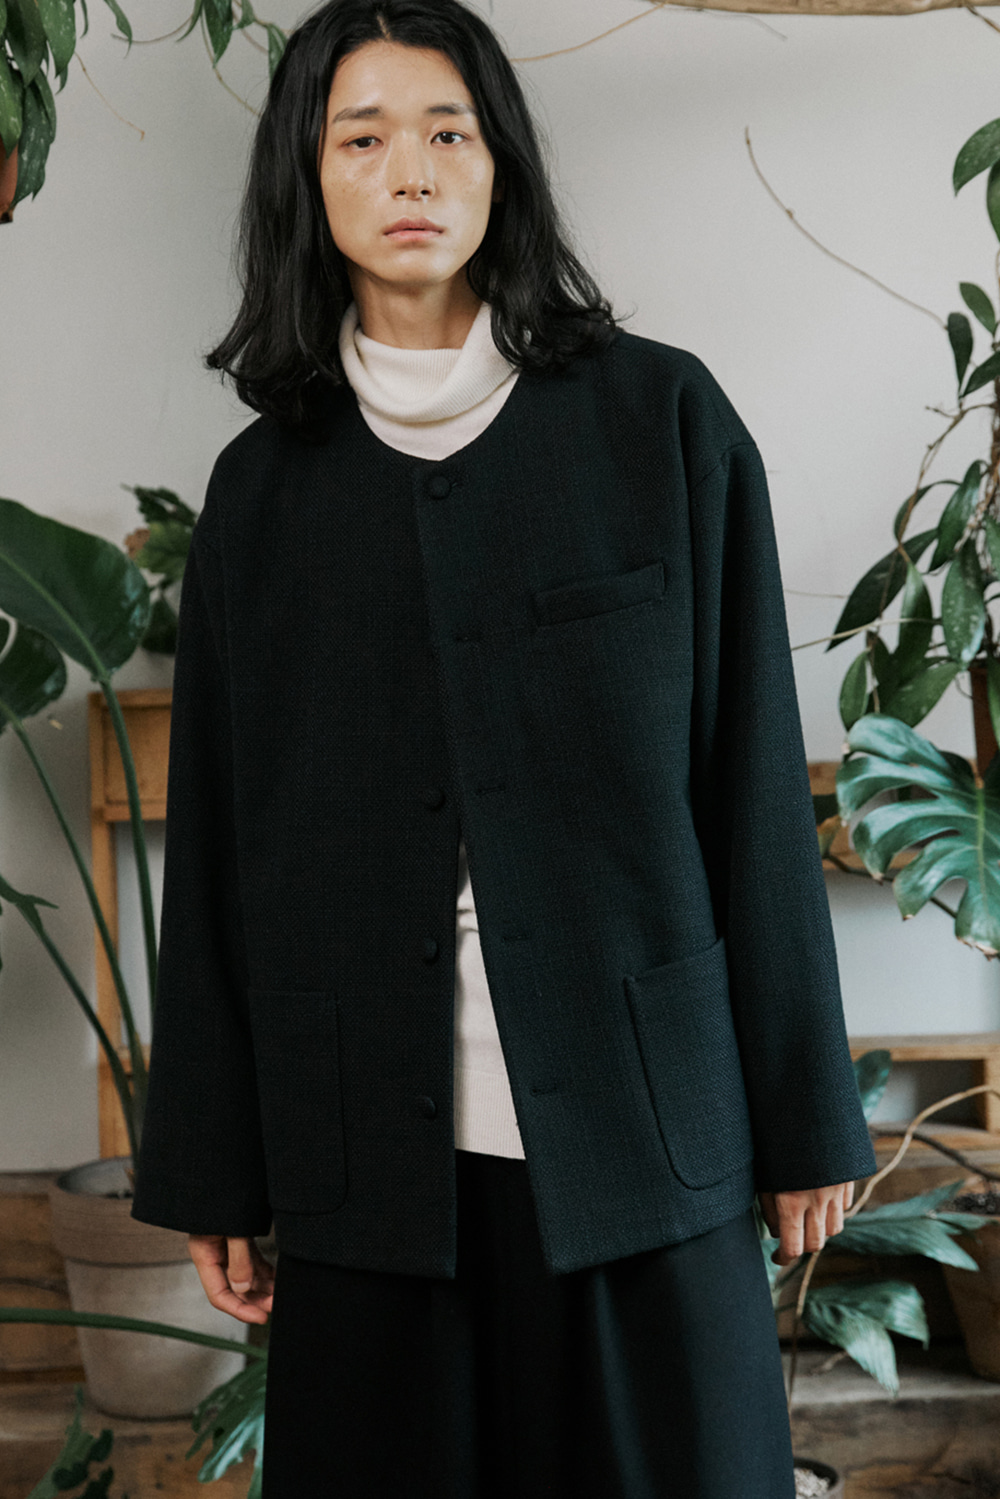 unisex tweed jacket black [3color]